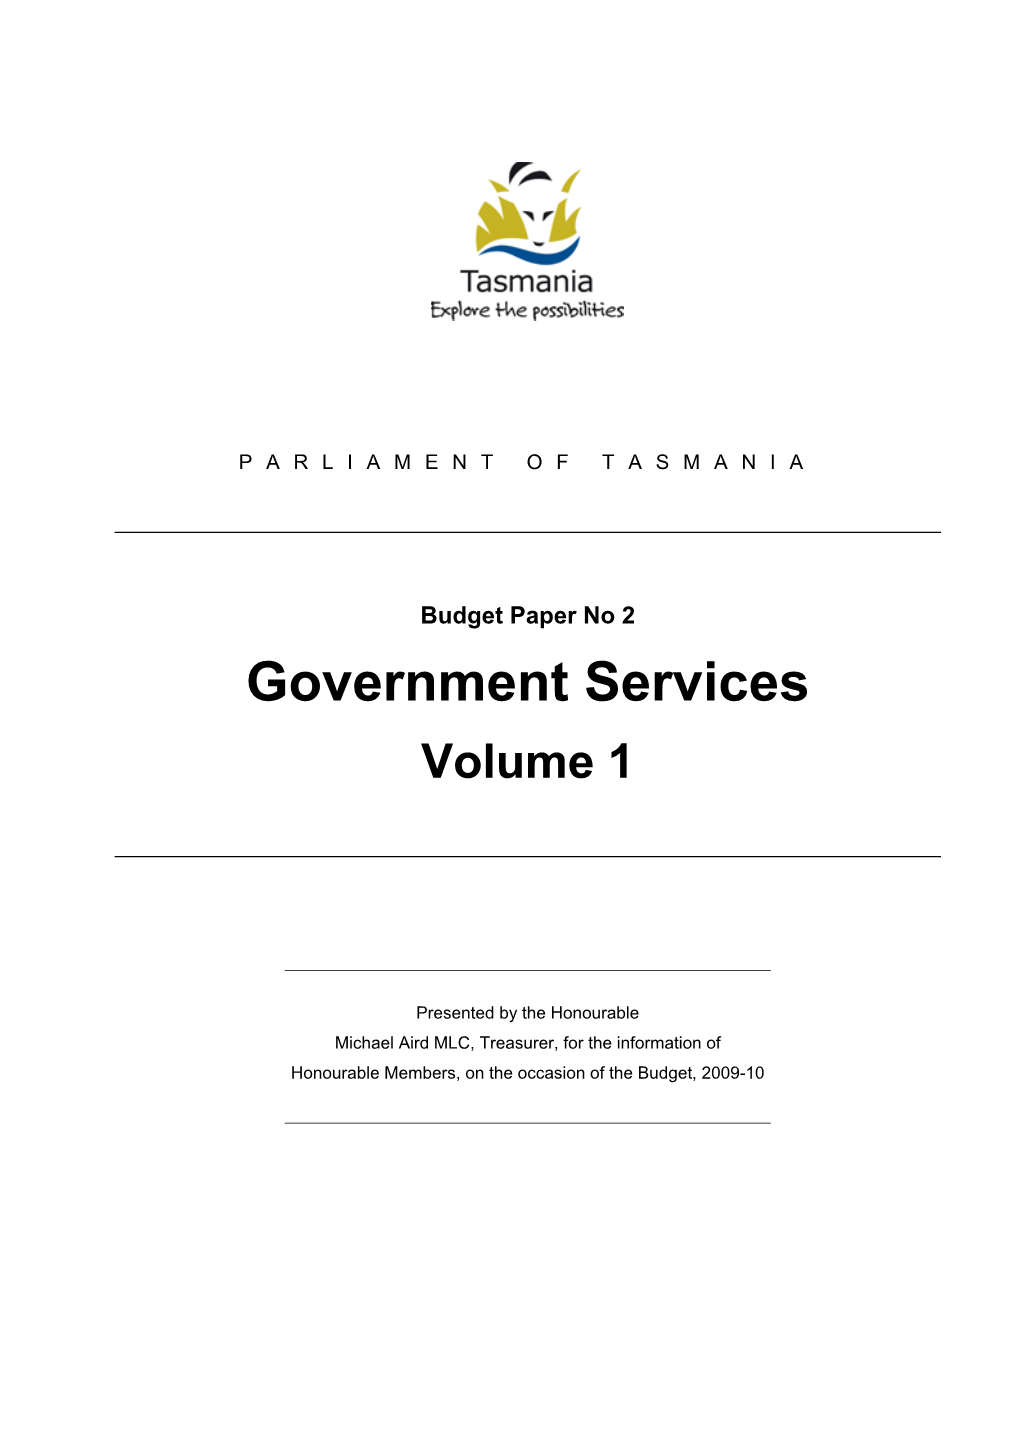 2009-10 Budget Paper No 2 Volume 1